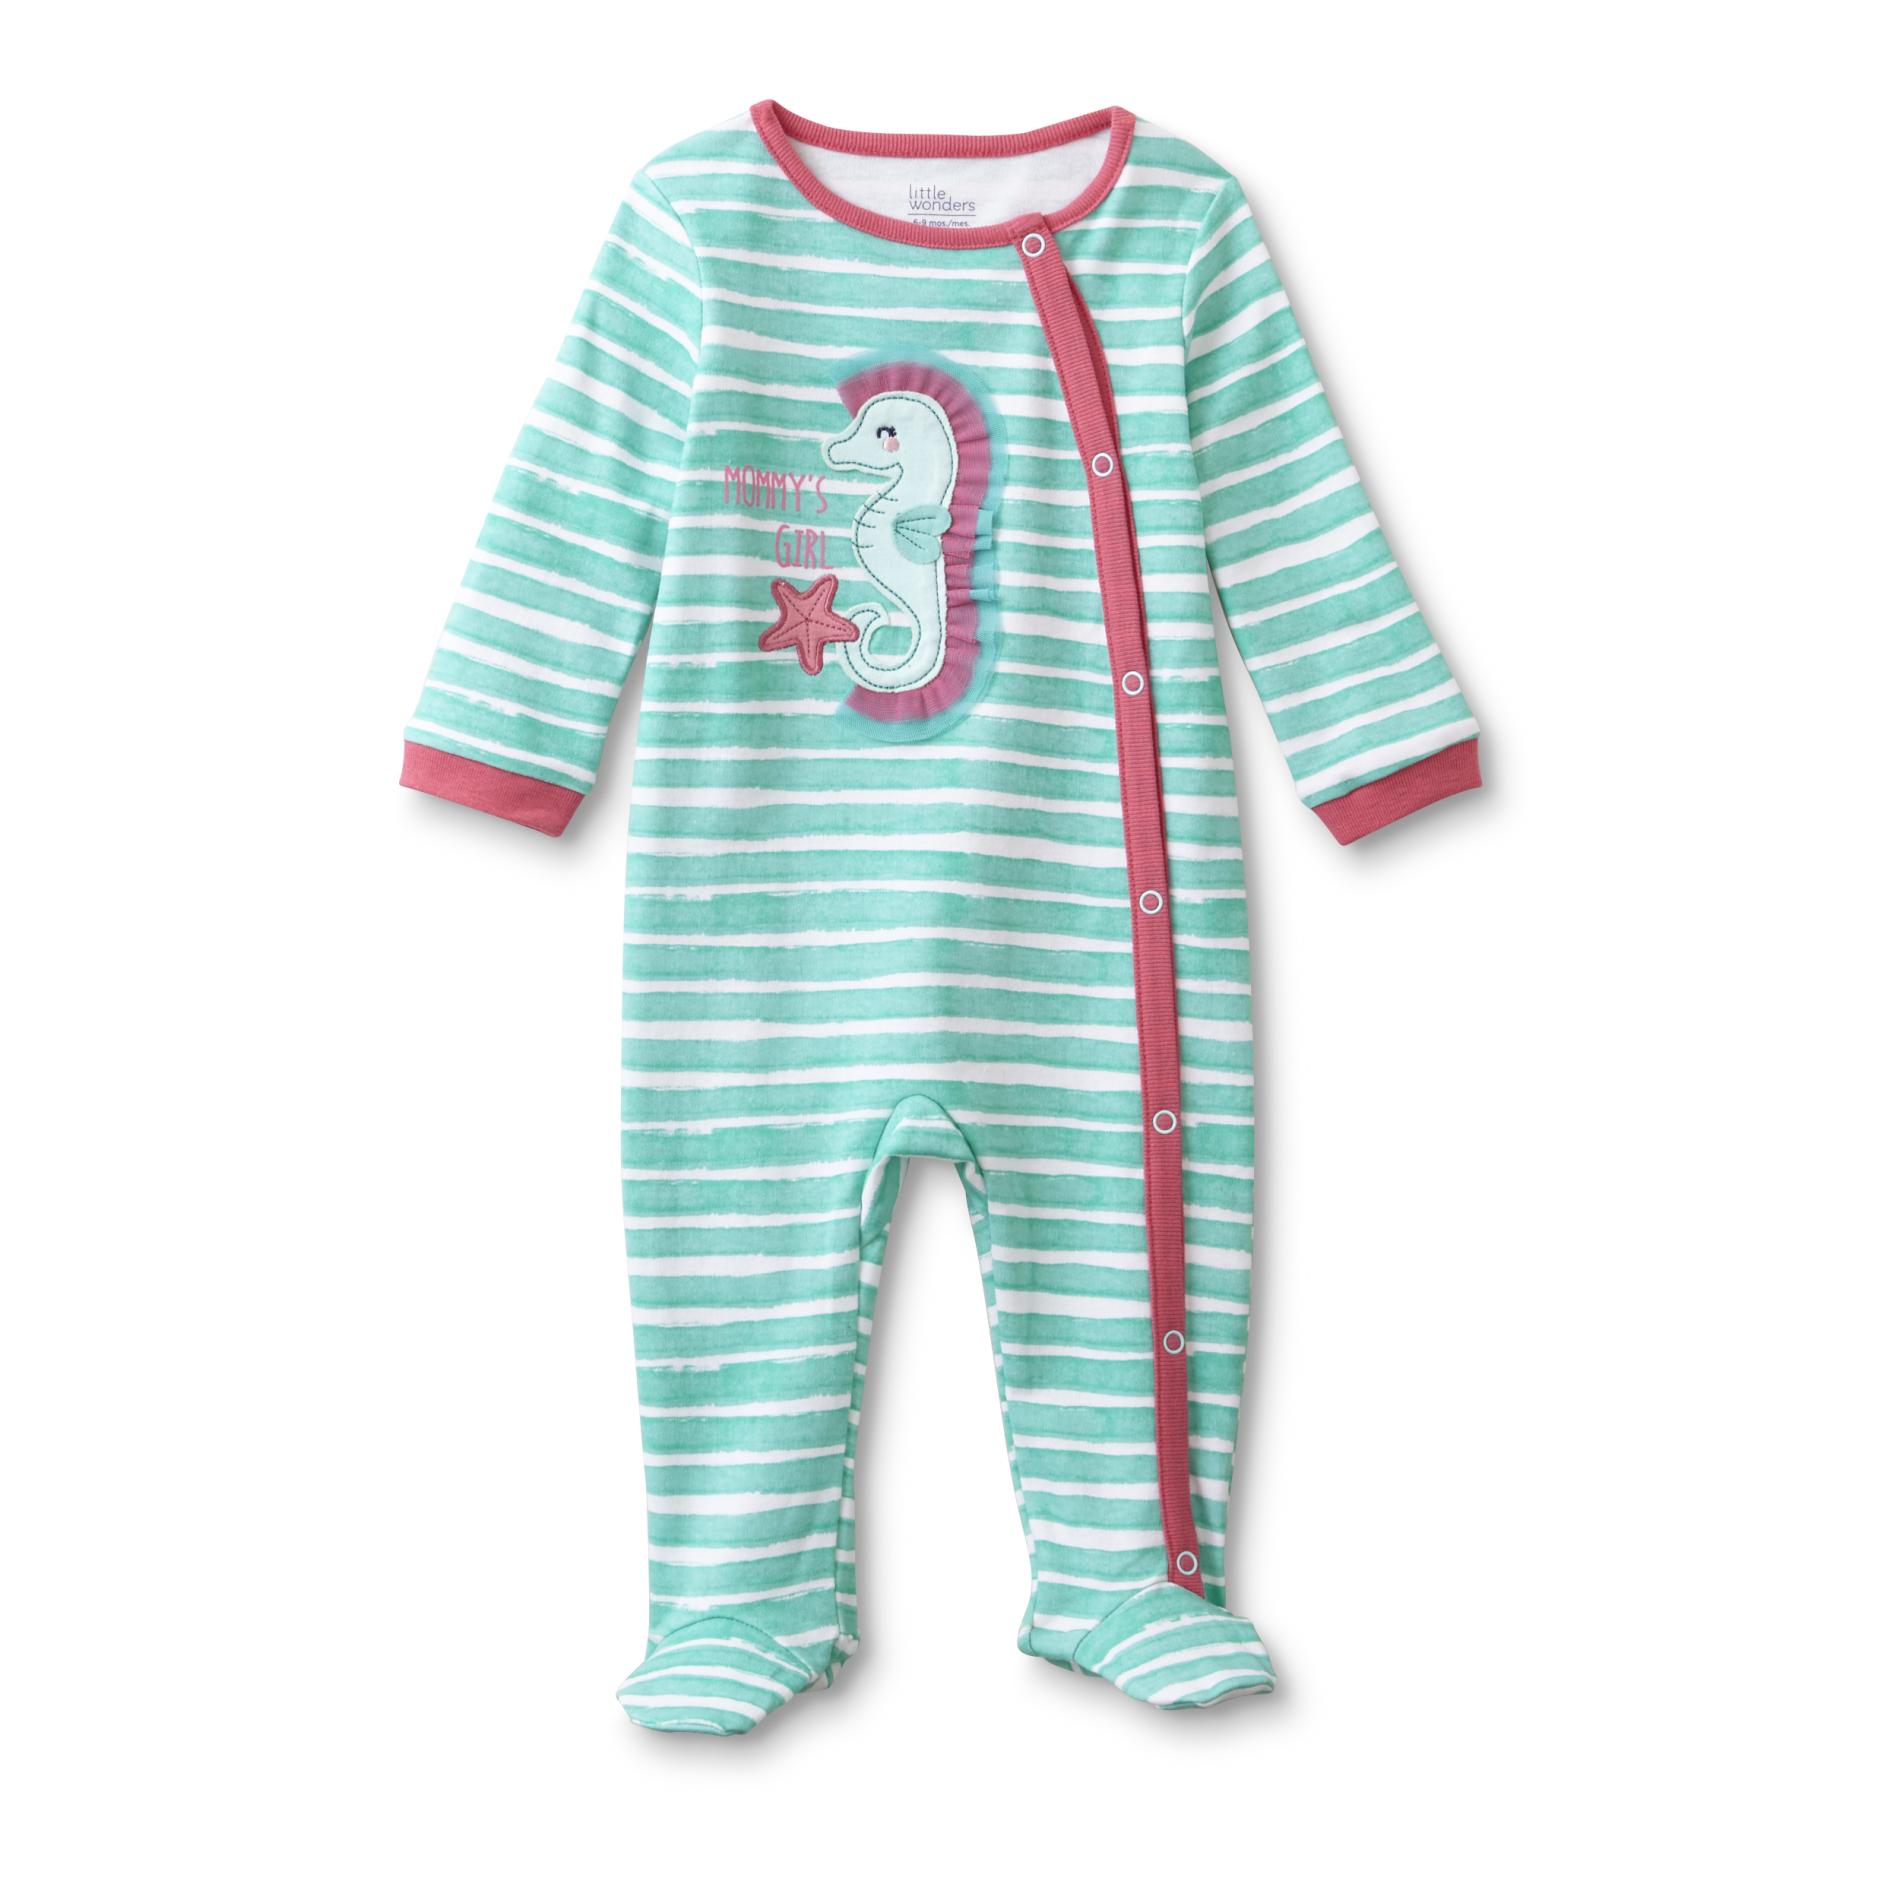 Little Wonders Newborn Girl's Footed Sleeper Pajamas - Seahorse